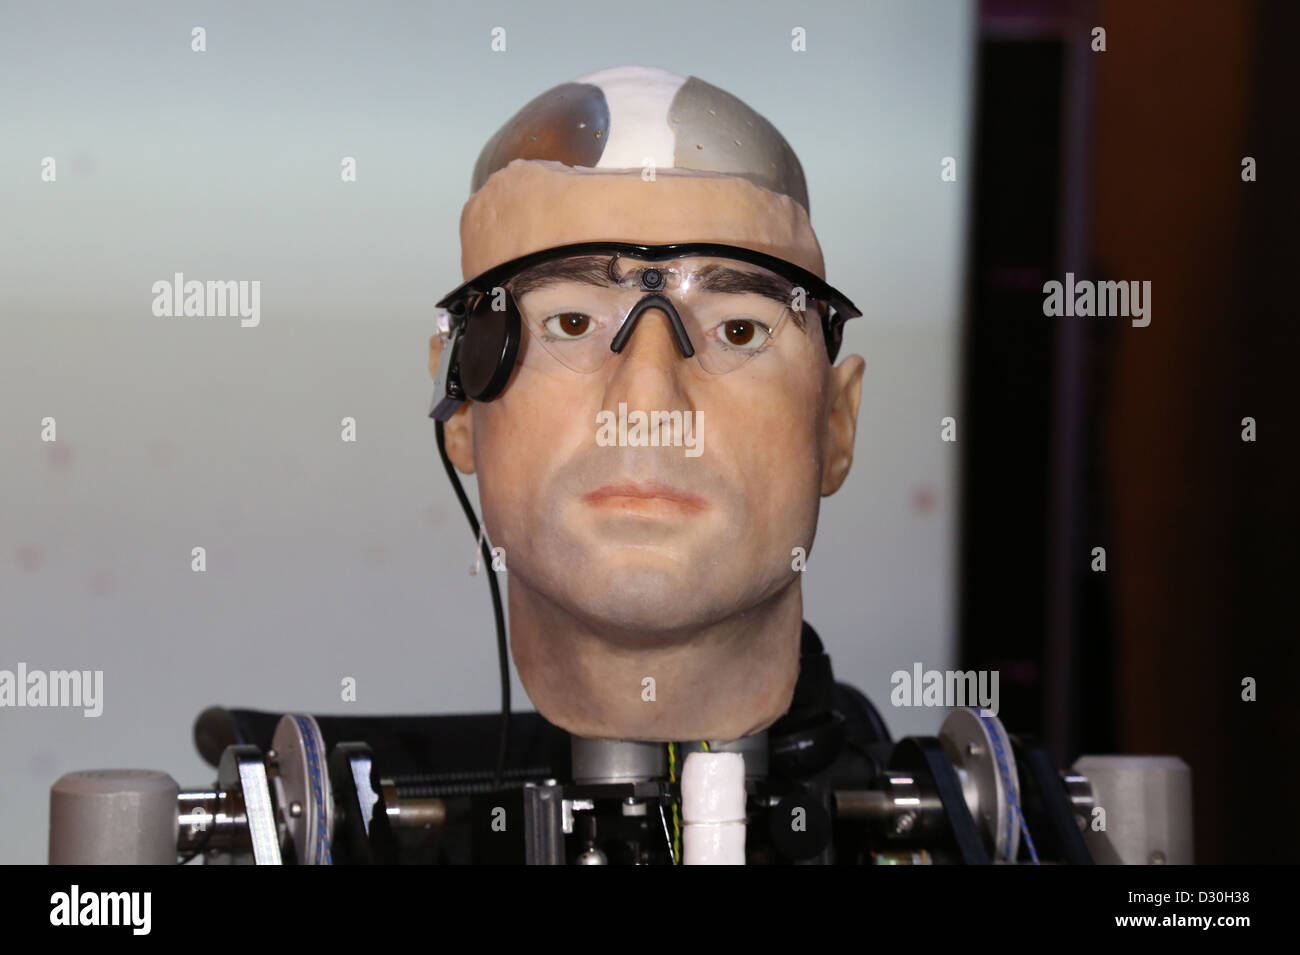 Bionische Mann Rex Roboter Science Museum Stockfoto